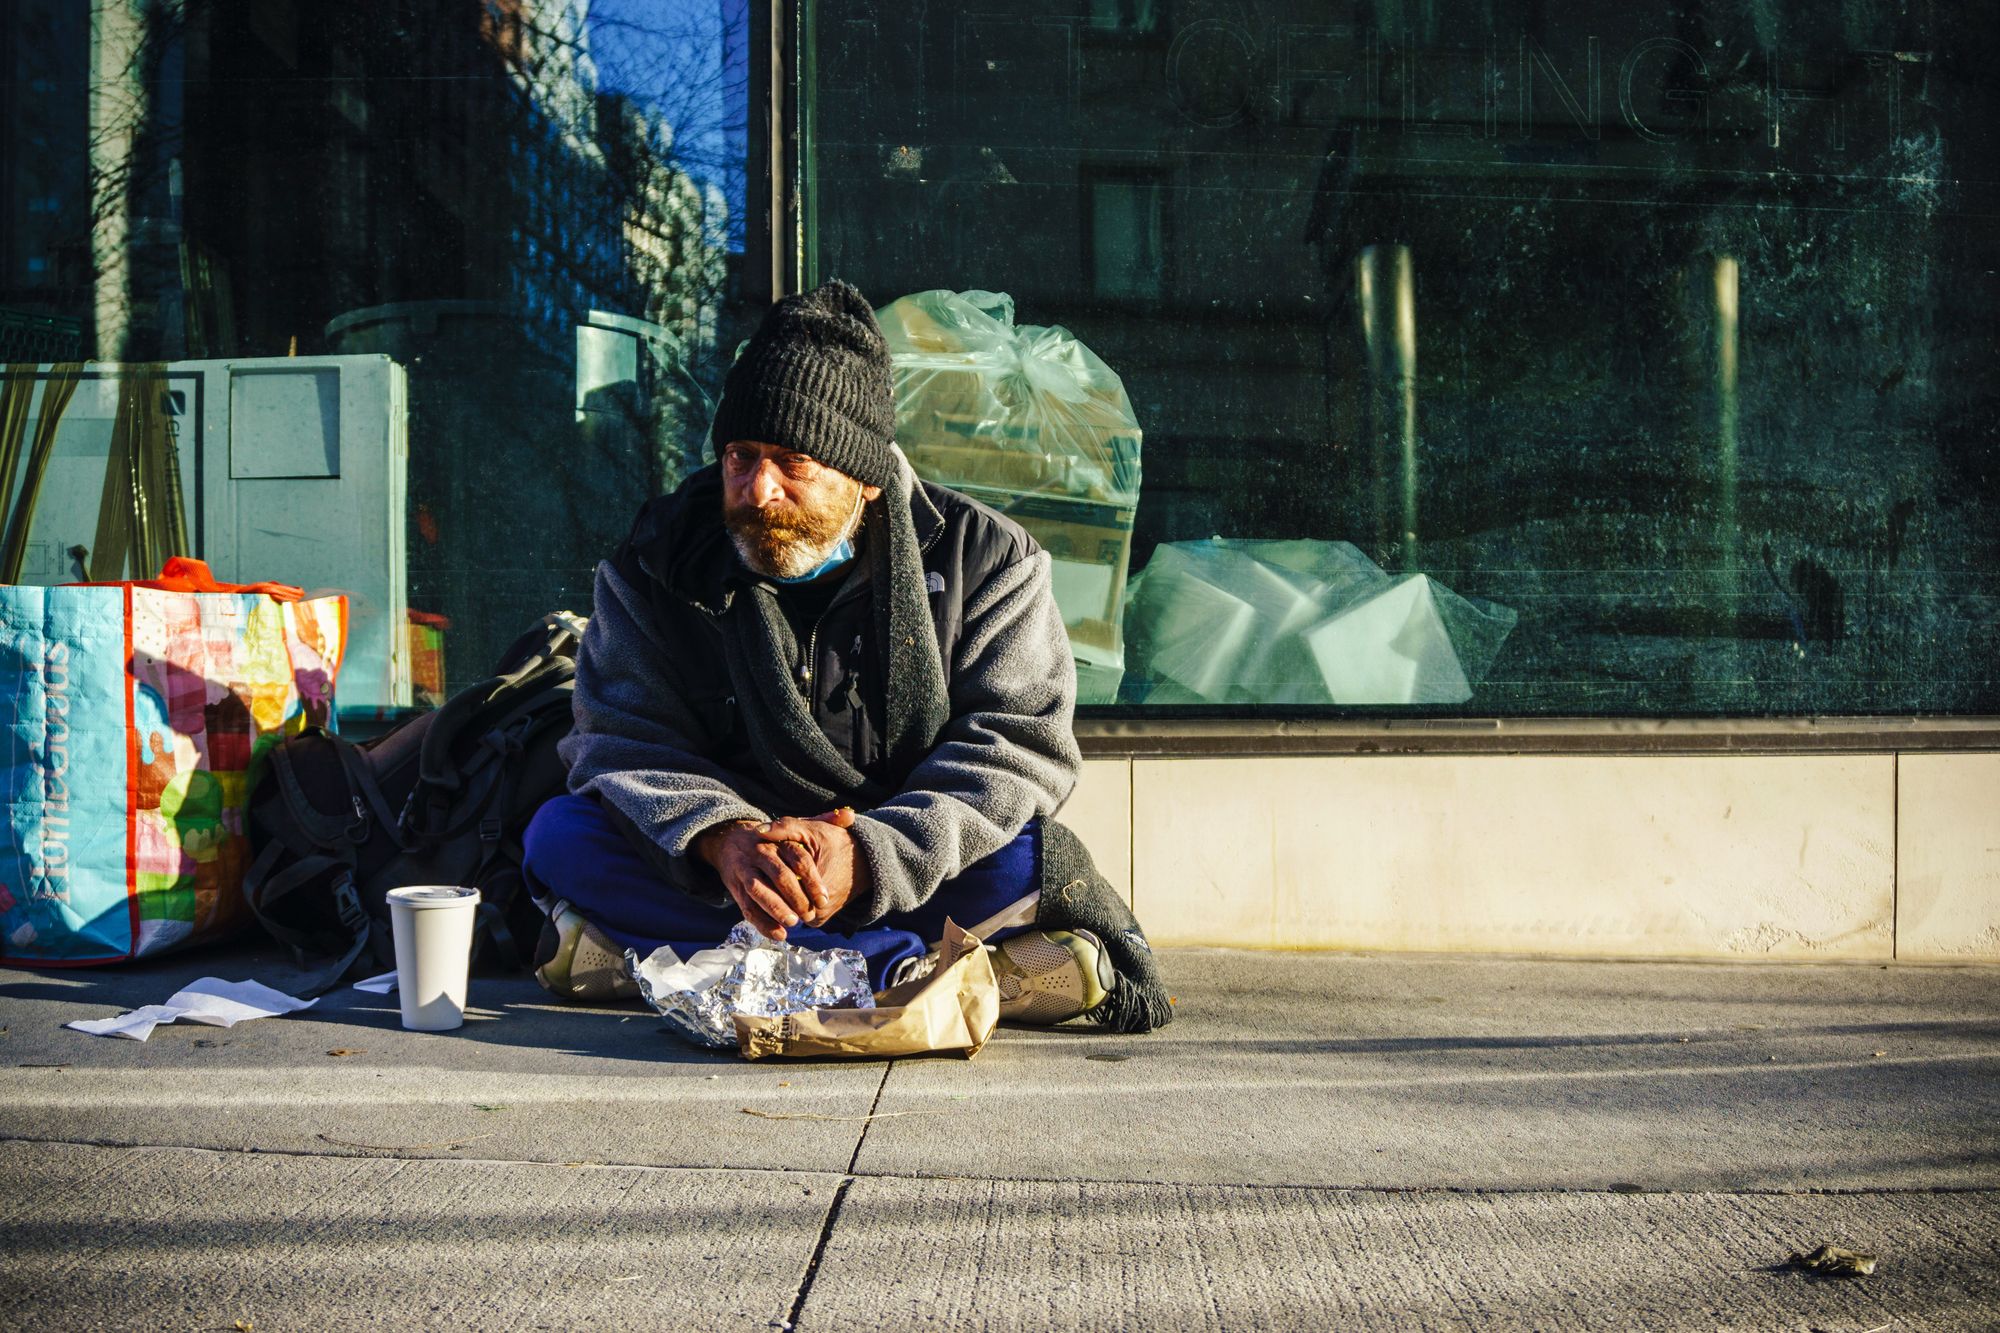 A homeless man at East 67th street & Lexington avenue, NY. Photo by Clay LeConey on Unsplash